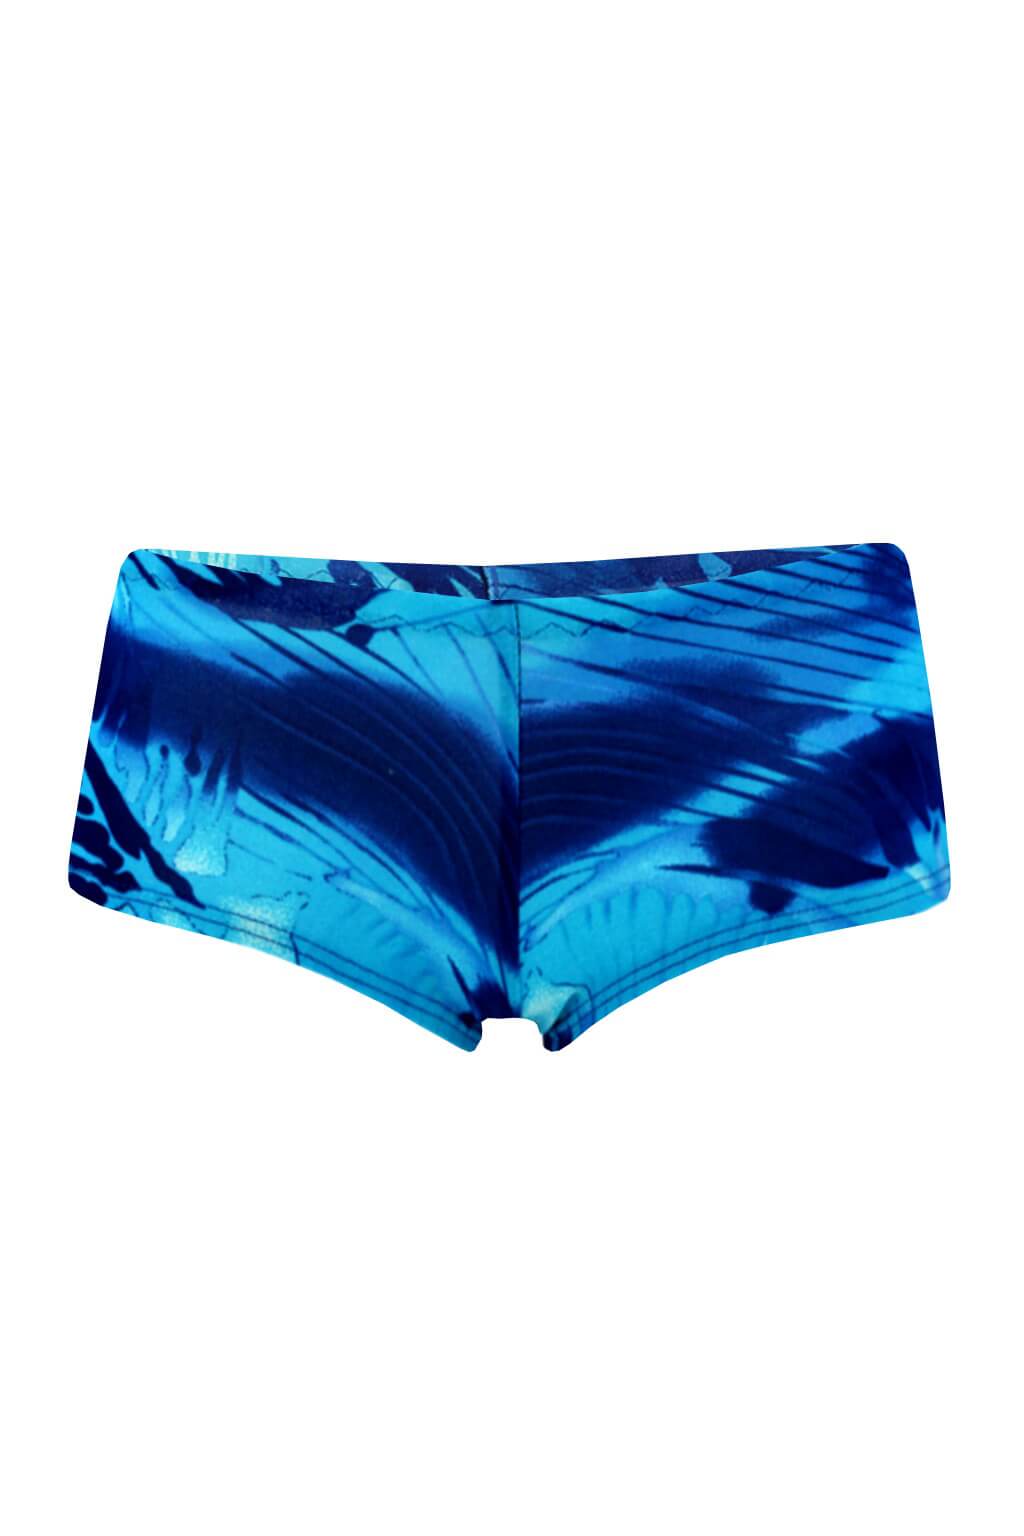 Aqua F- plavkové kalhotky XS modrá